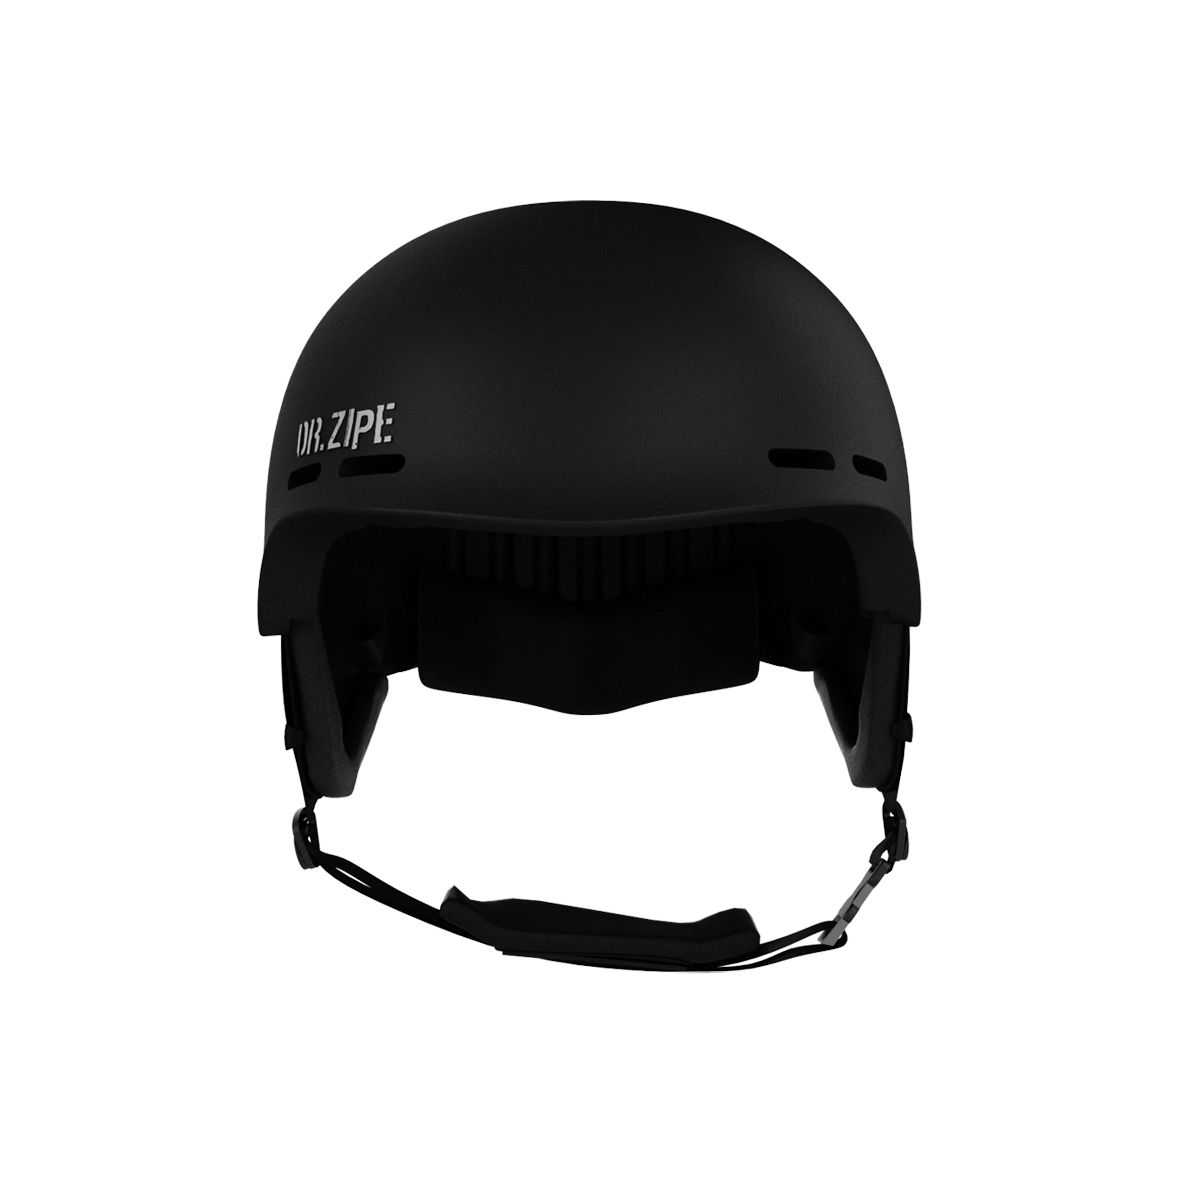  Cască Ski  -  dr. zipe Armor helmet Level IV